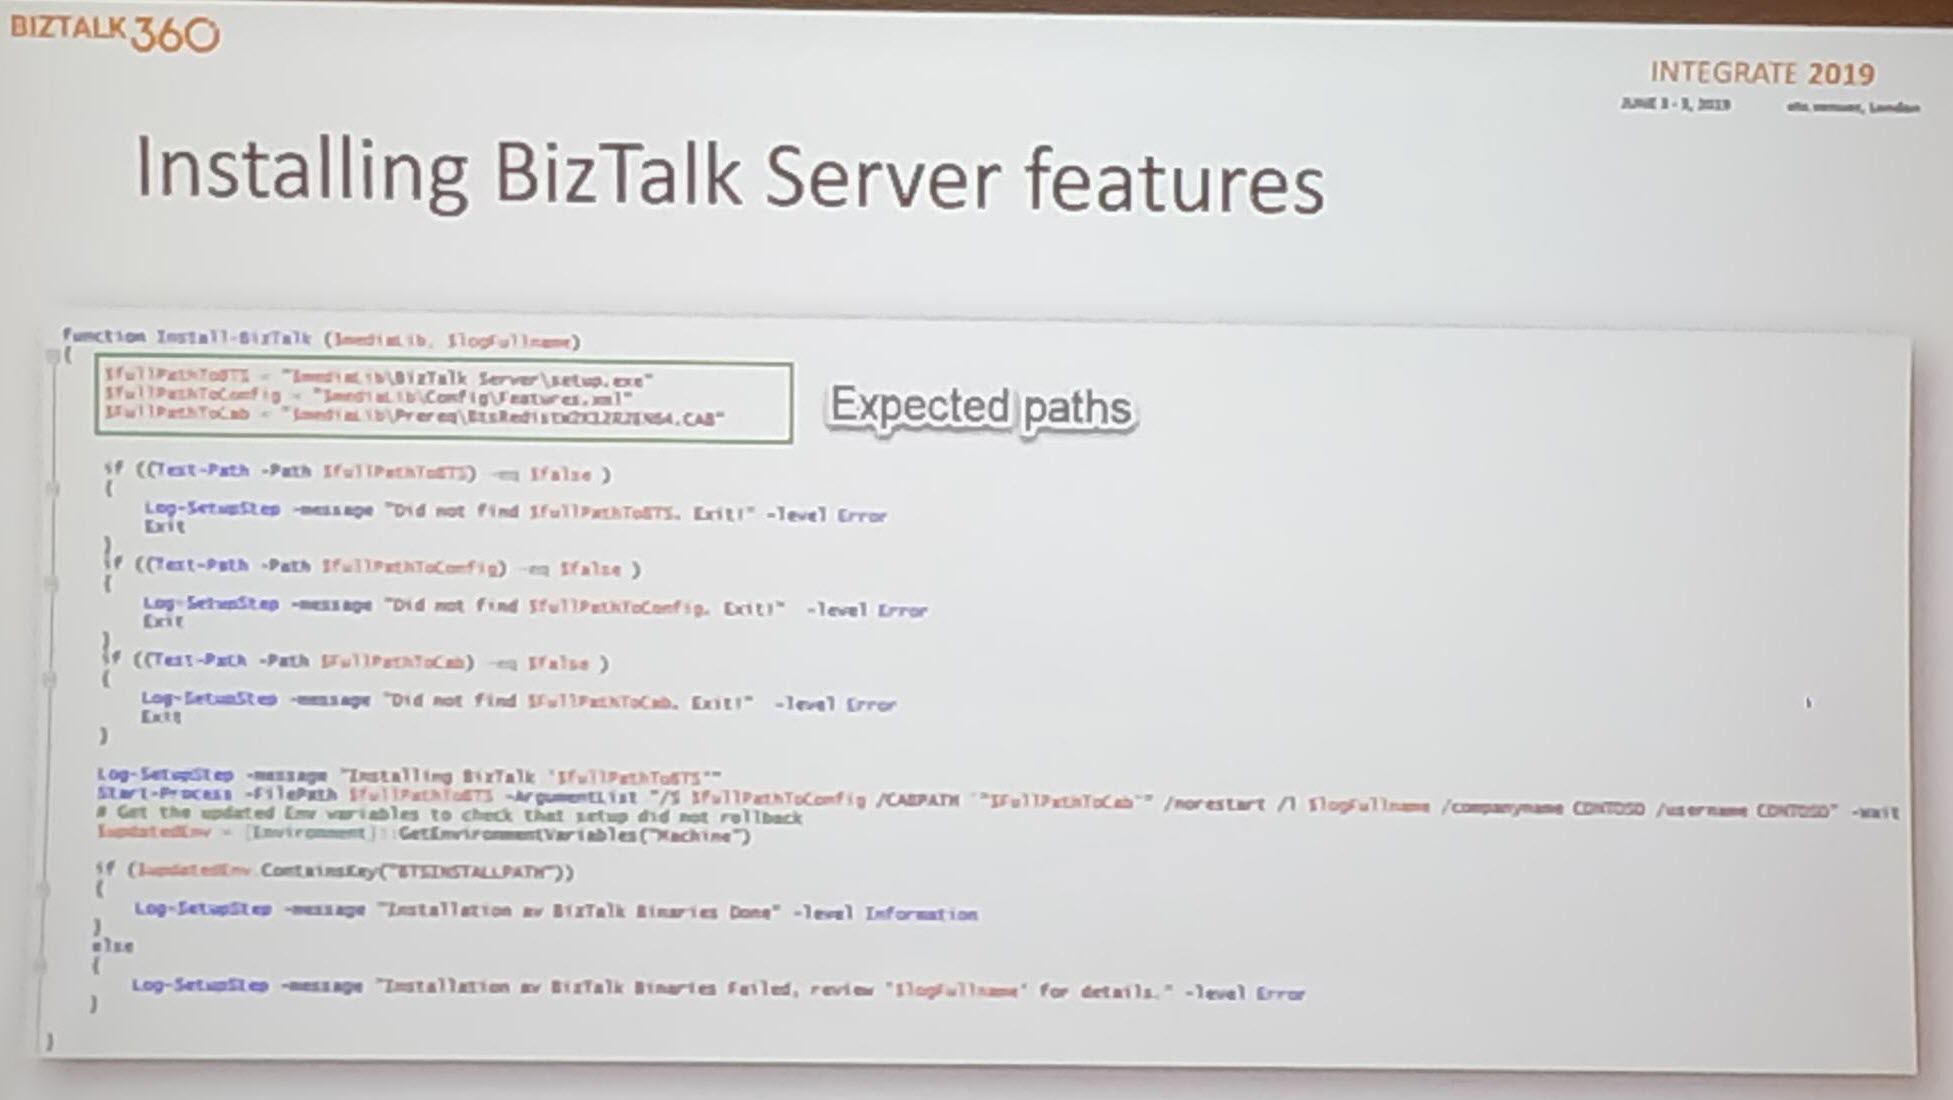 Installing BizTalk server features at Integrate 2019